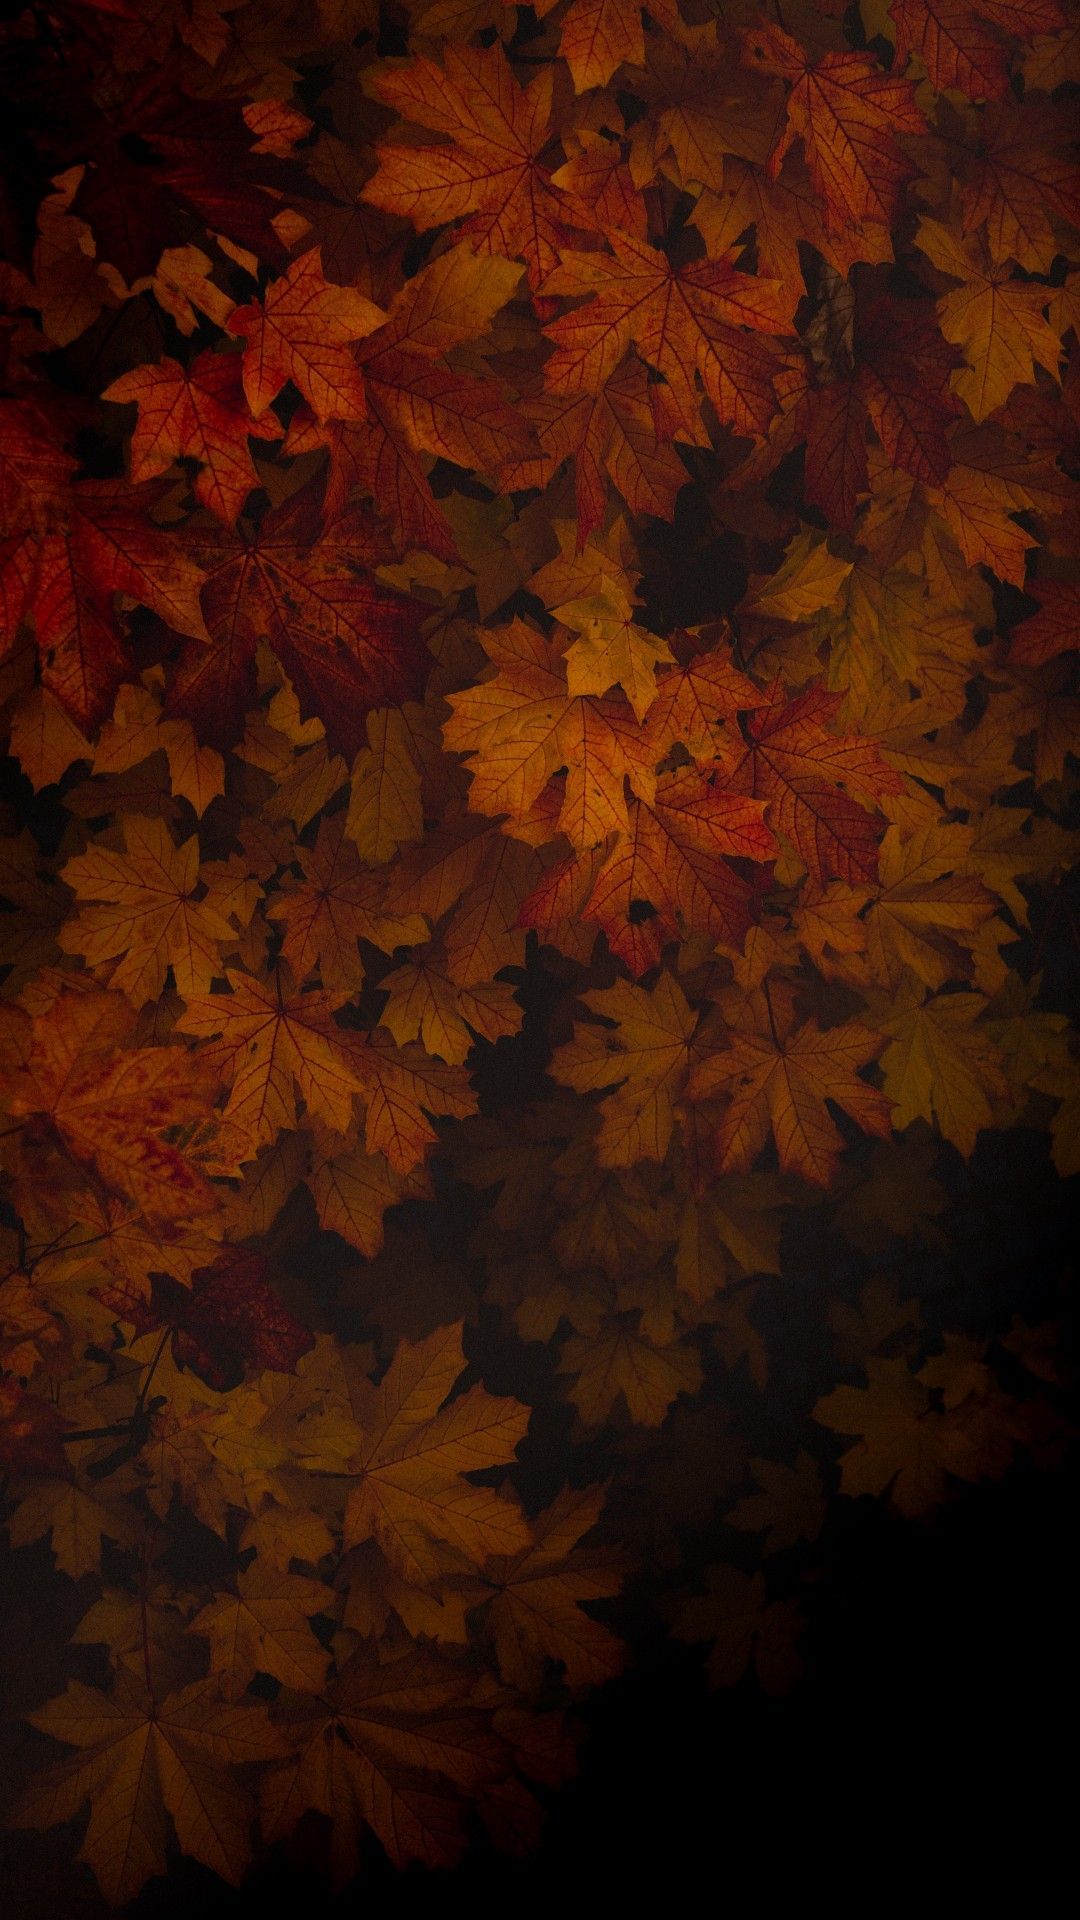 (◍•ᴗ•◍)❤. Autumn phone wallpaper, Autumn leaves wallpaper, Leaves wallpaper iphone